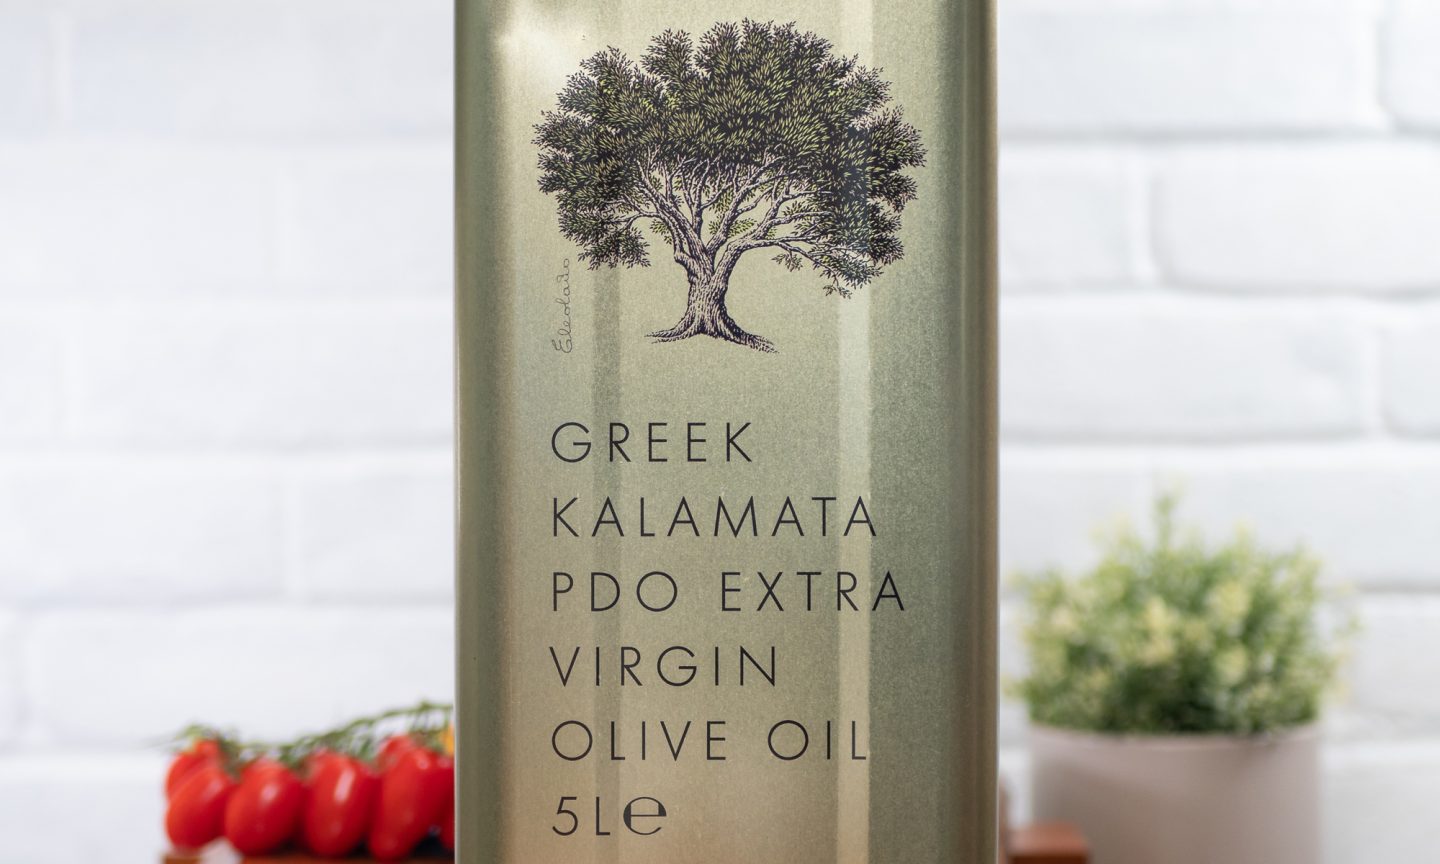 NEW Arrival Of Odysea Kalamata Greek PDO Extra Virgin Olive Oil 5l Tins